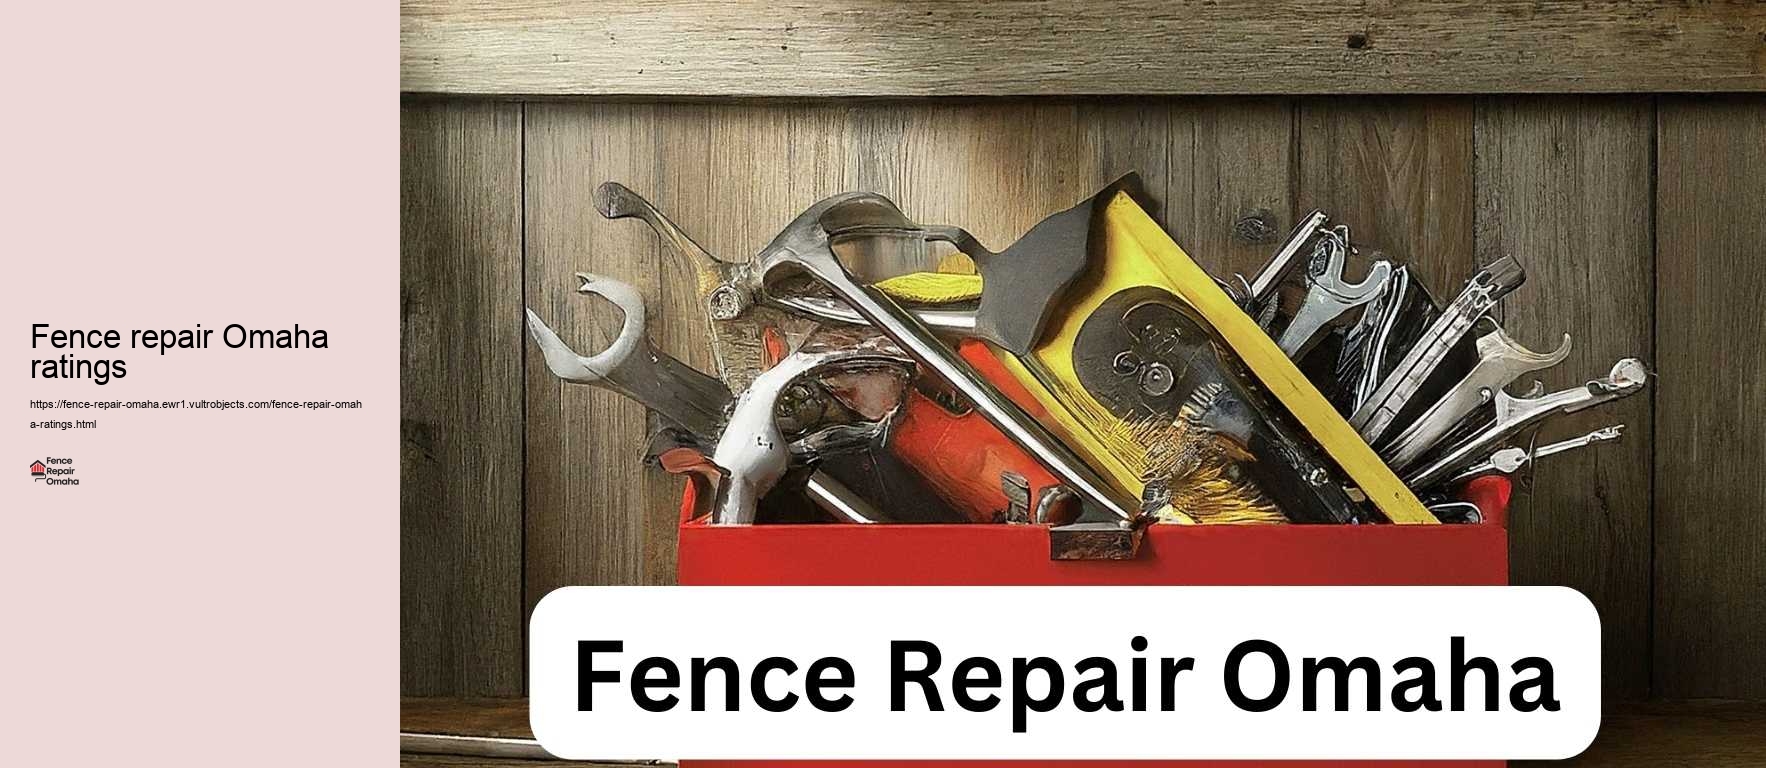 Fence repair Omaha ratings